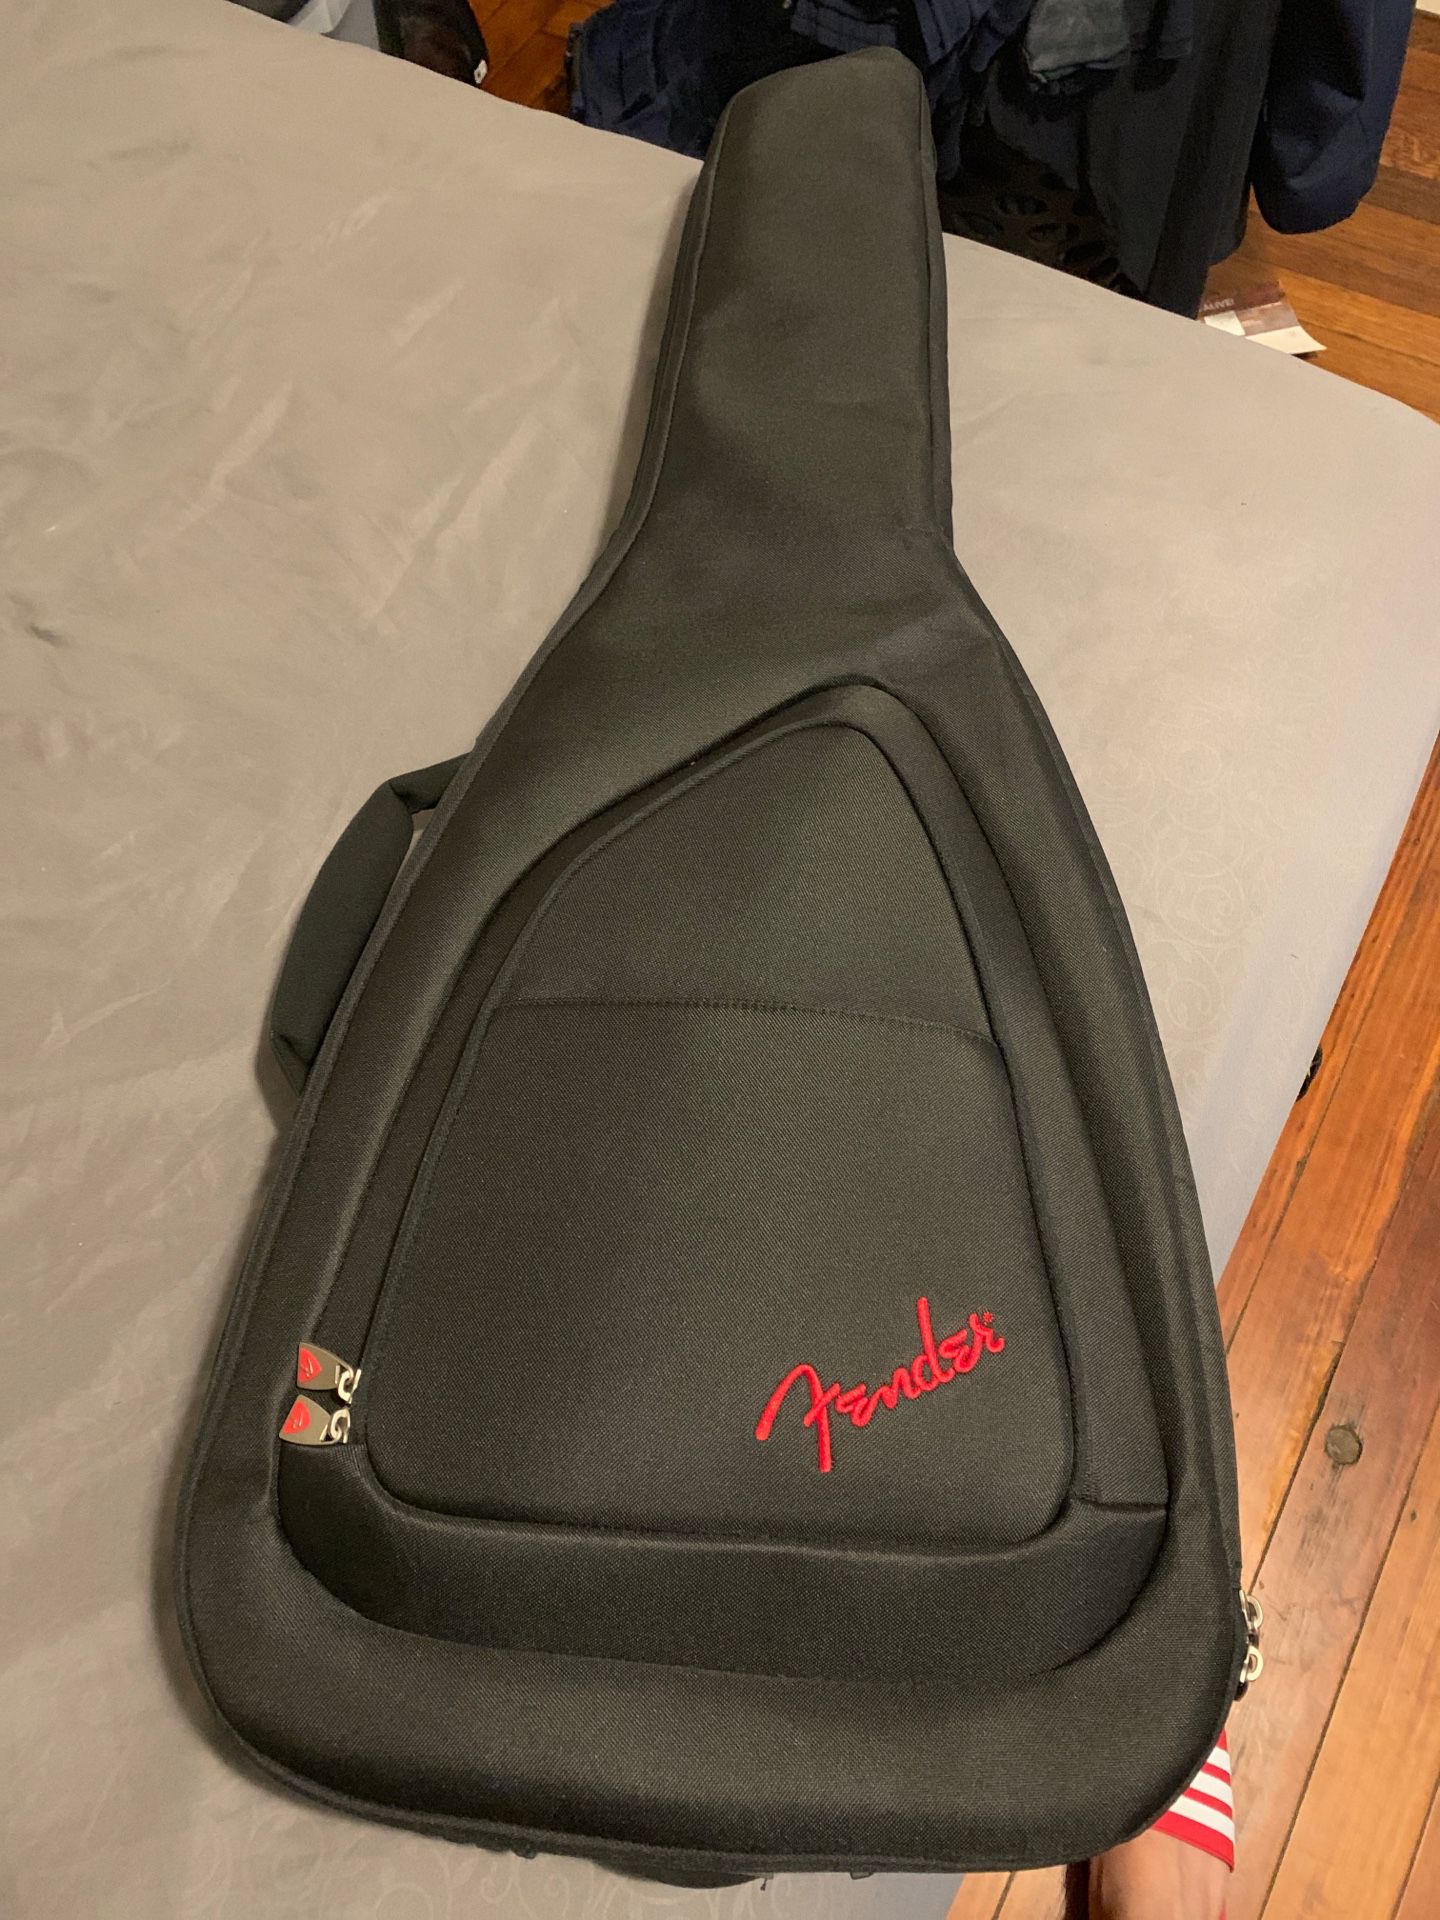 Fender guitar bag